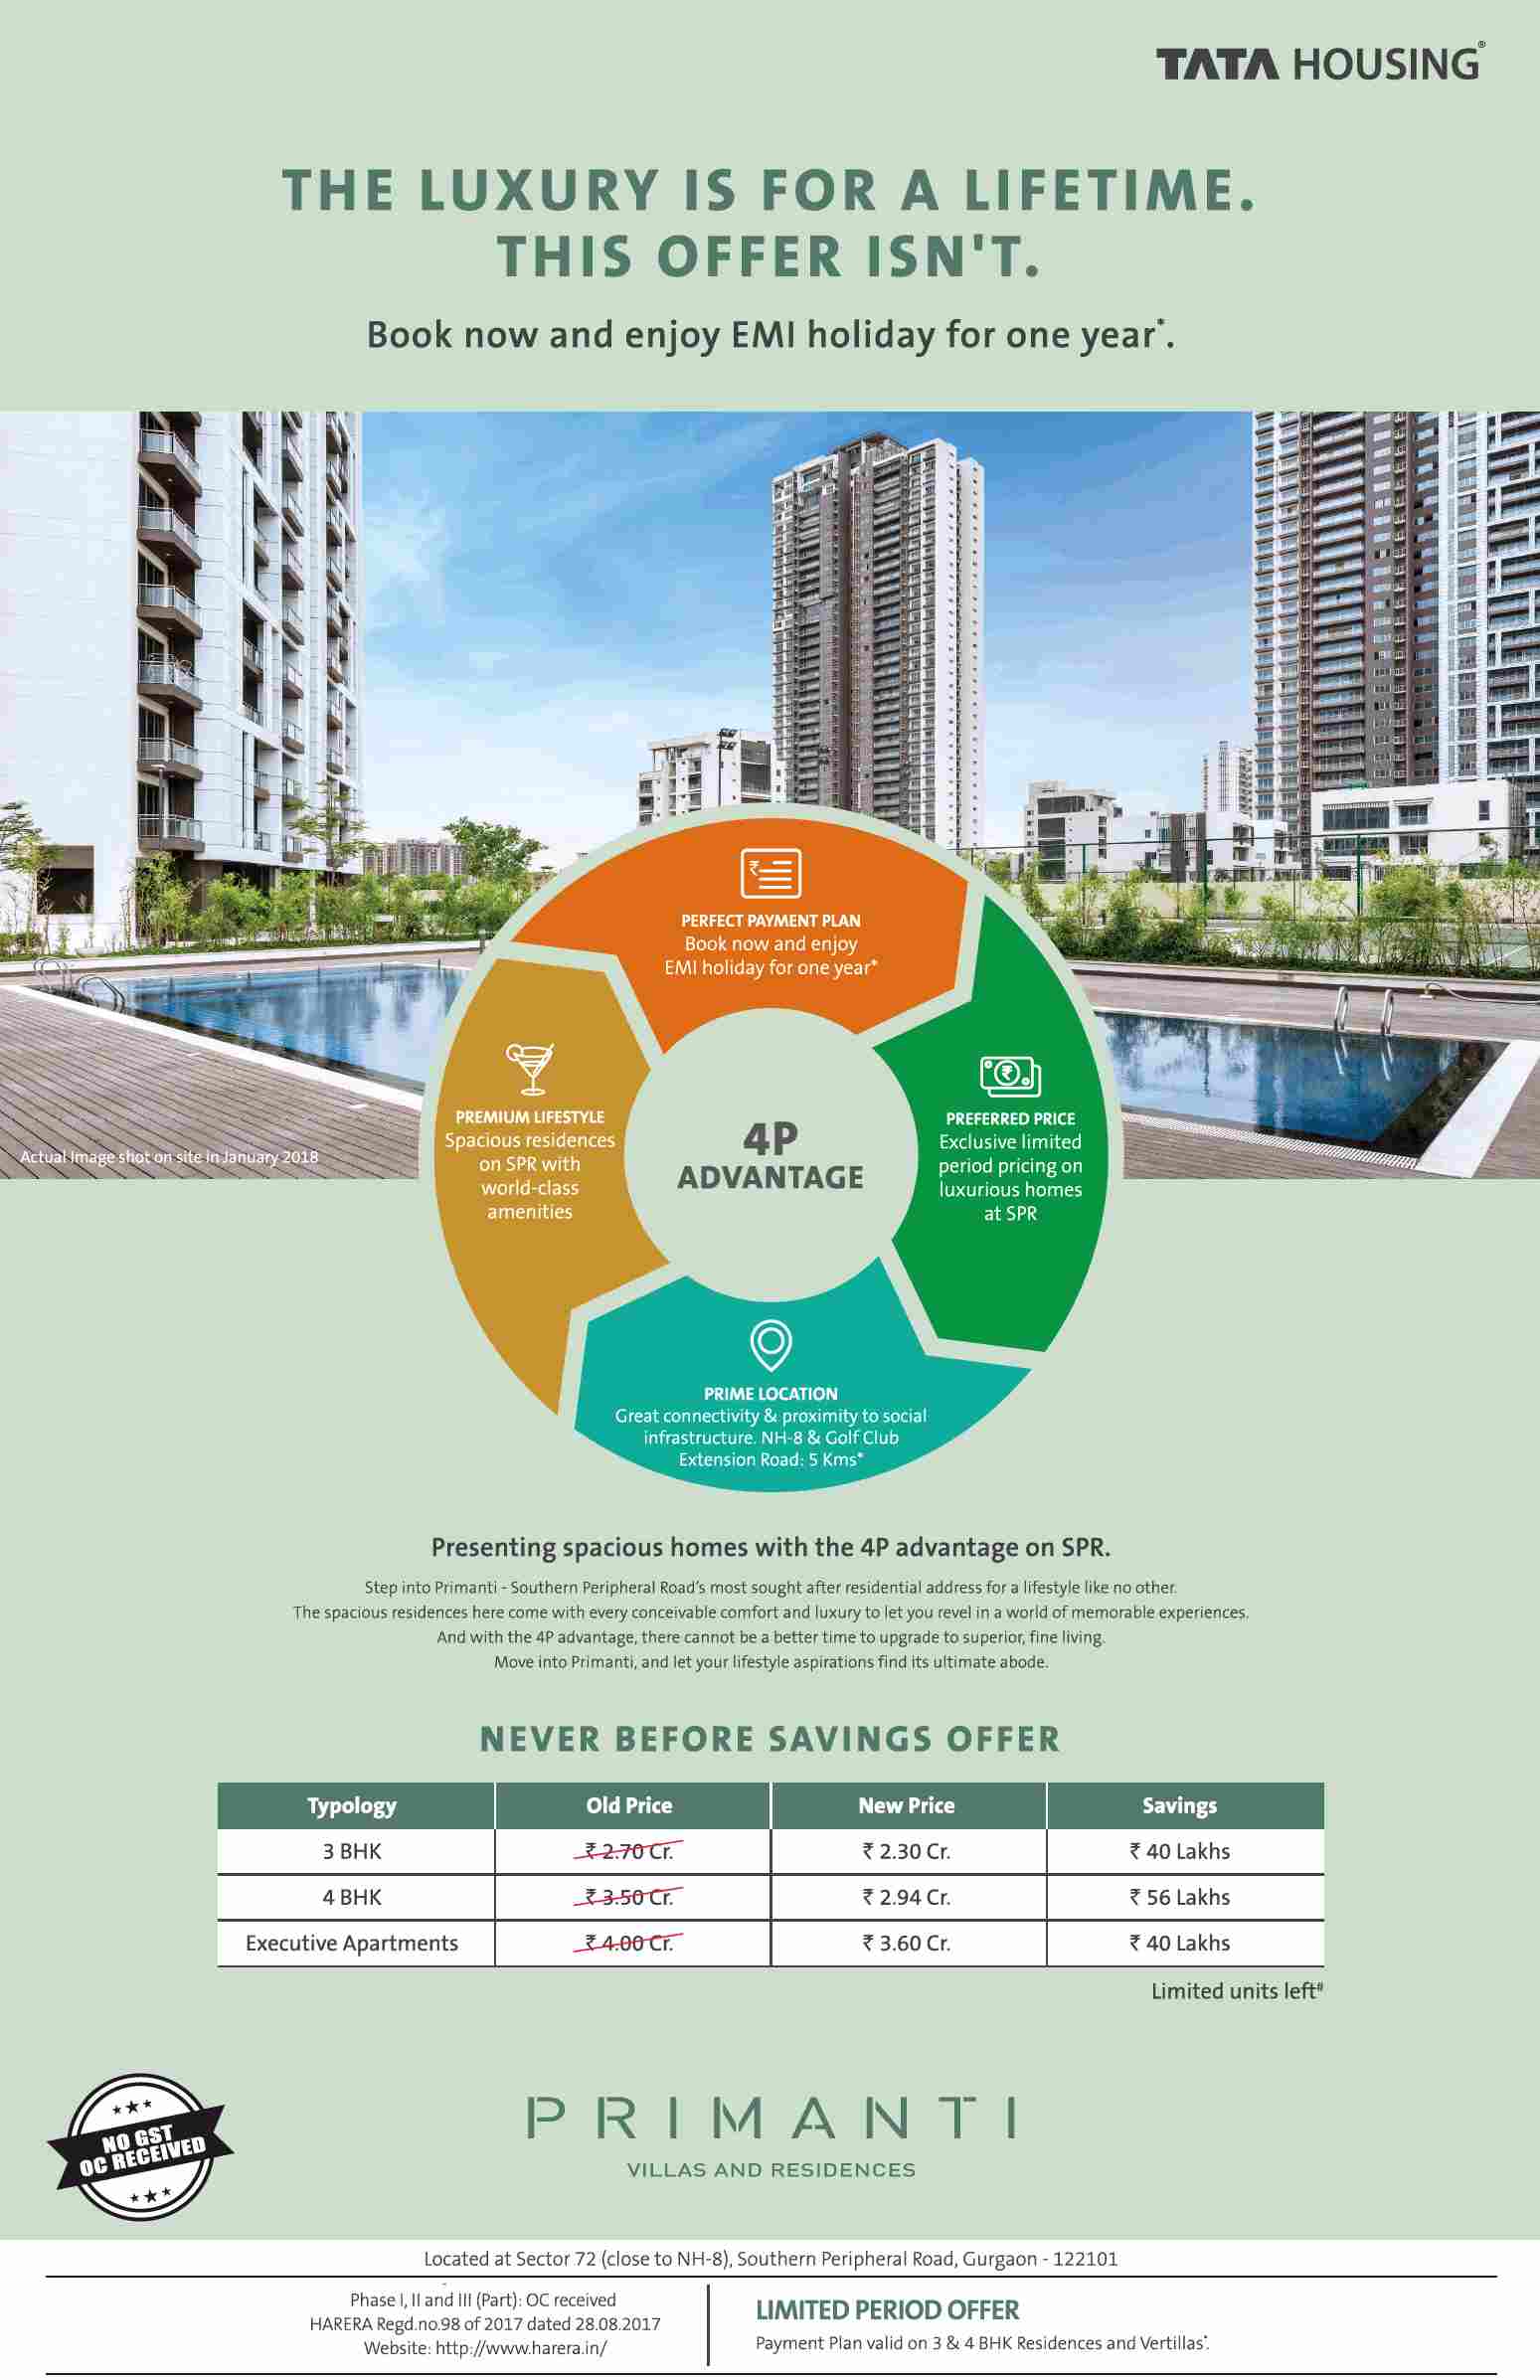 Presenting spacious homes with the 4 P advantage at Tata Primanti in Gurgaon